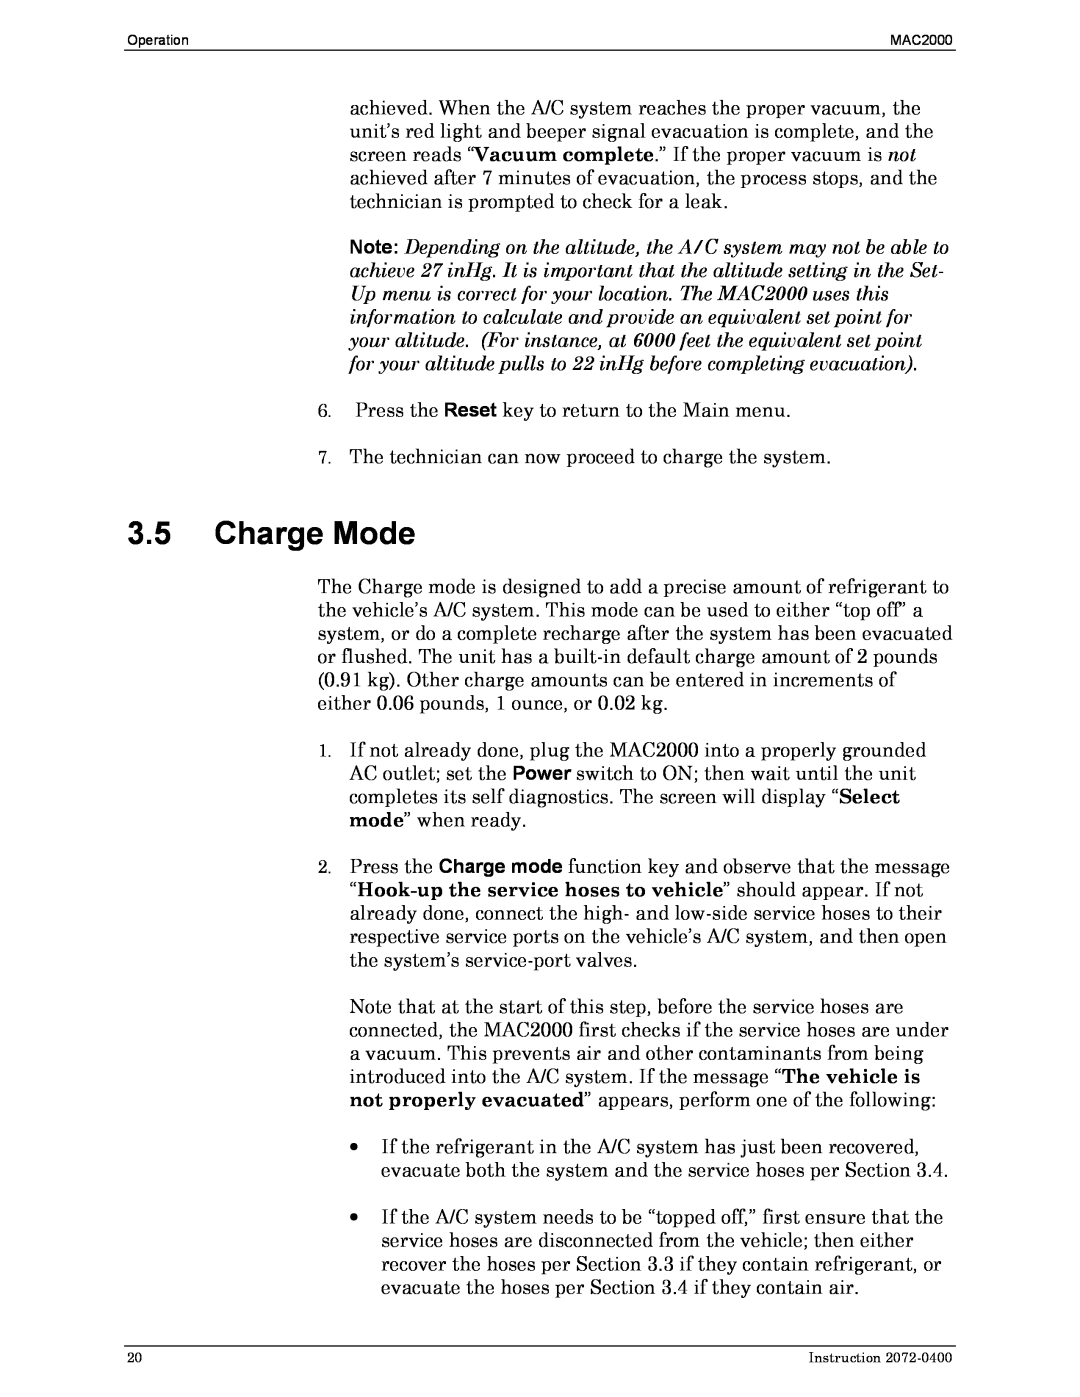 Bacharach 2072-0400 manual 3.5Charge Mode 